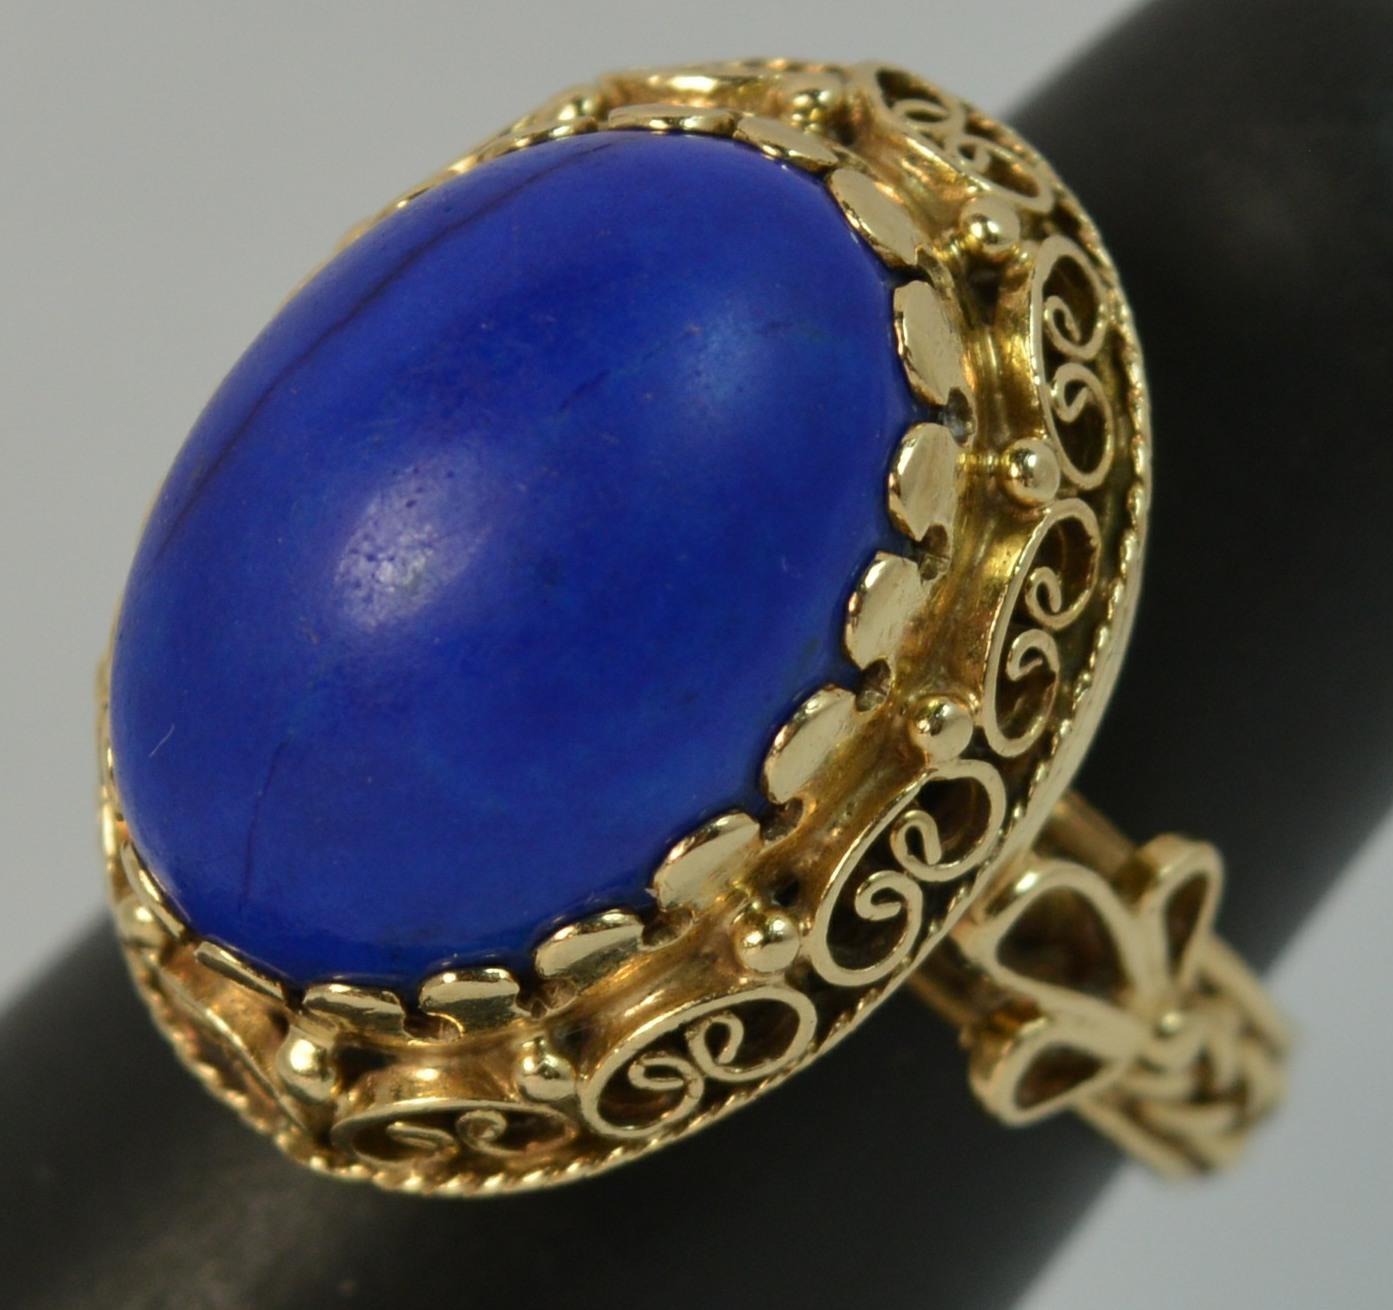 Stunning Lapis Lazuli and 14 Carat Gold Unique Statement Ring 7